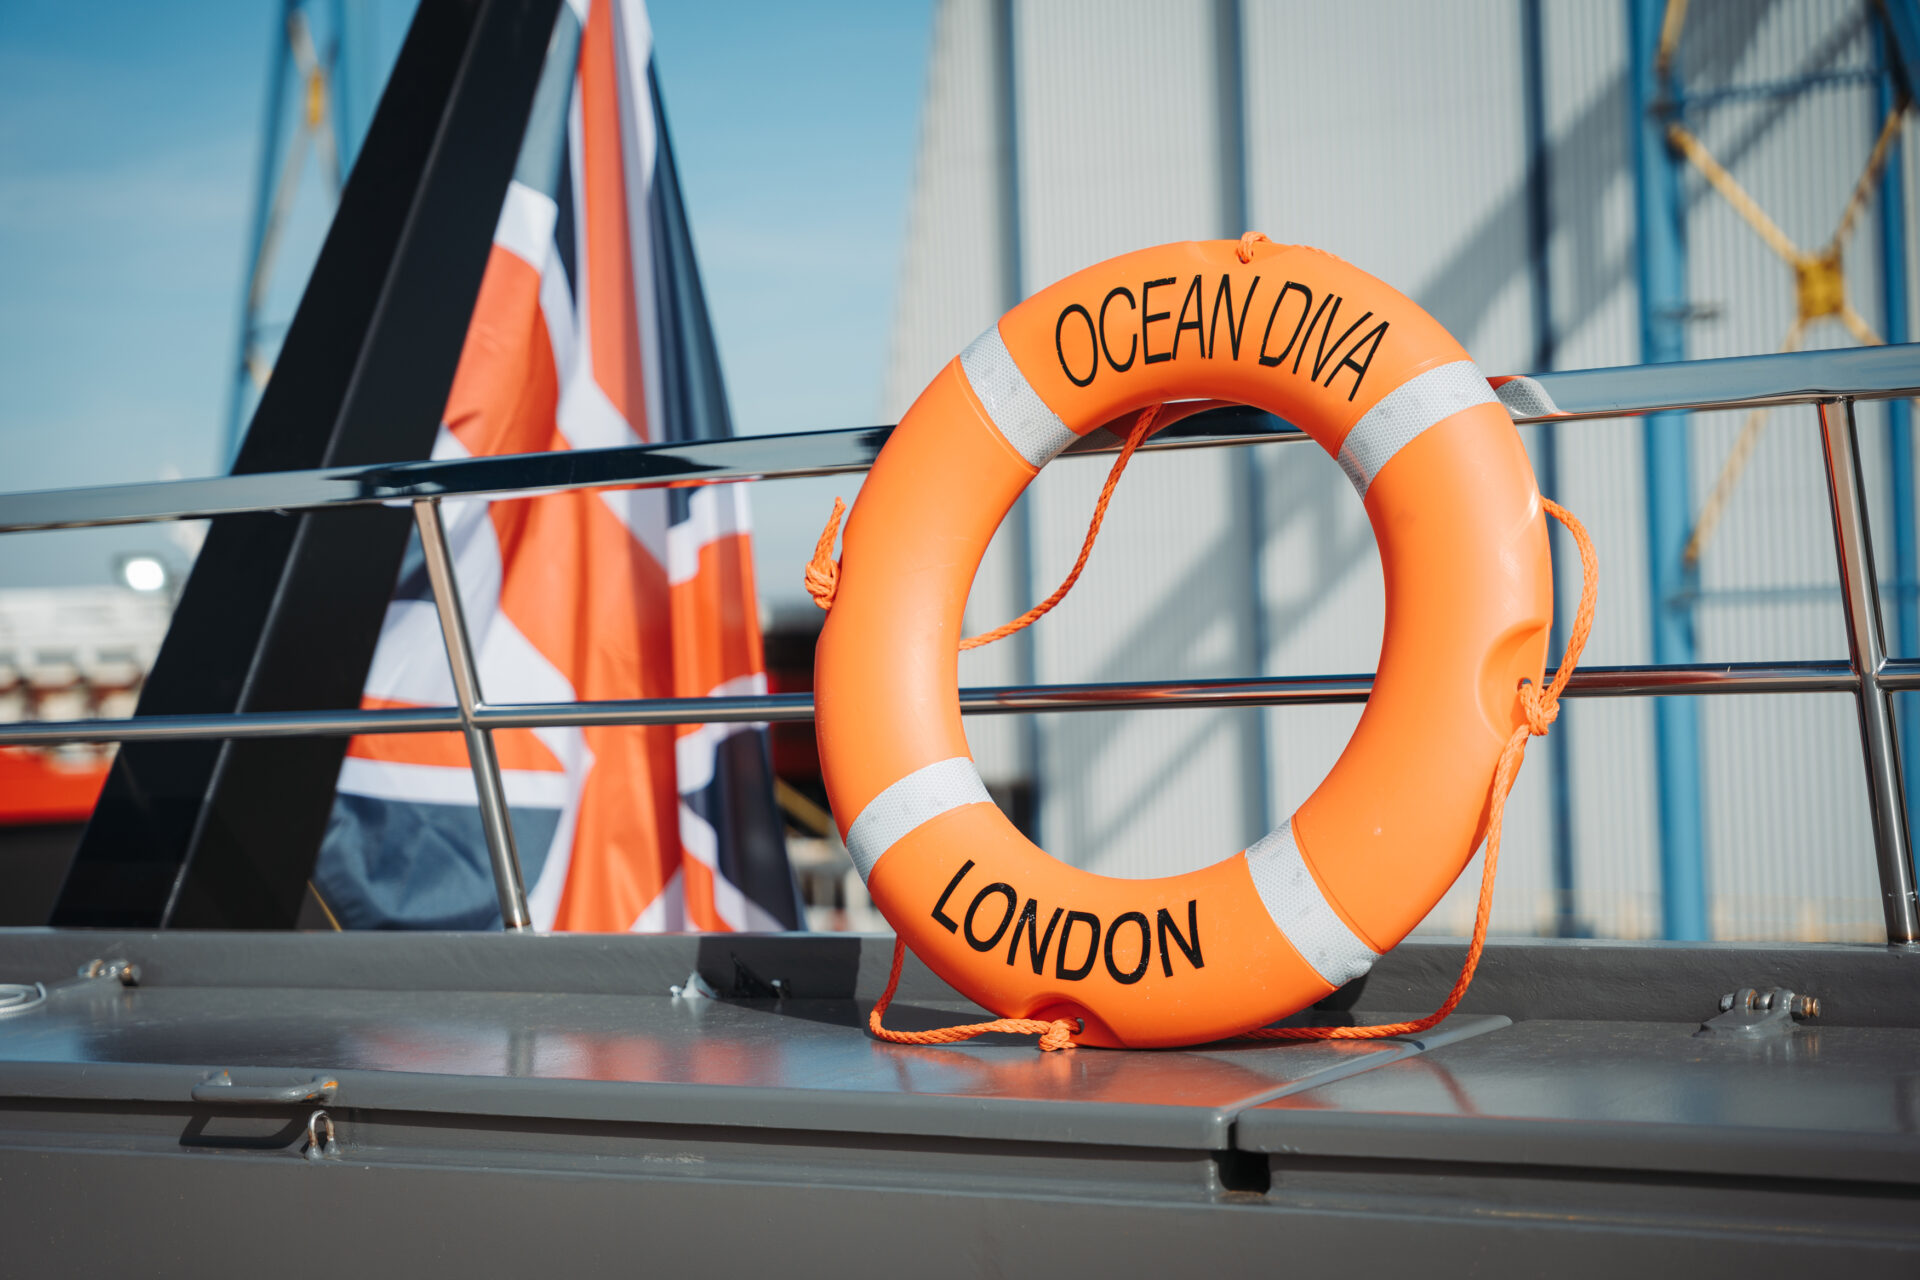 Exterior Oceandiva London, GB Flag and Lifebuoy